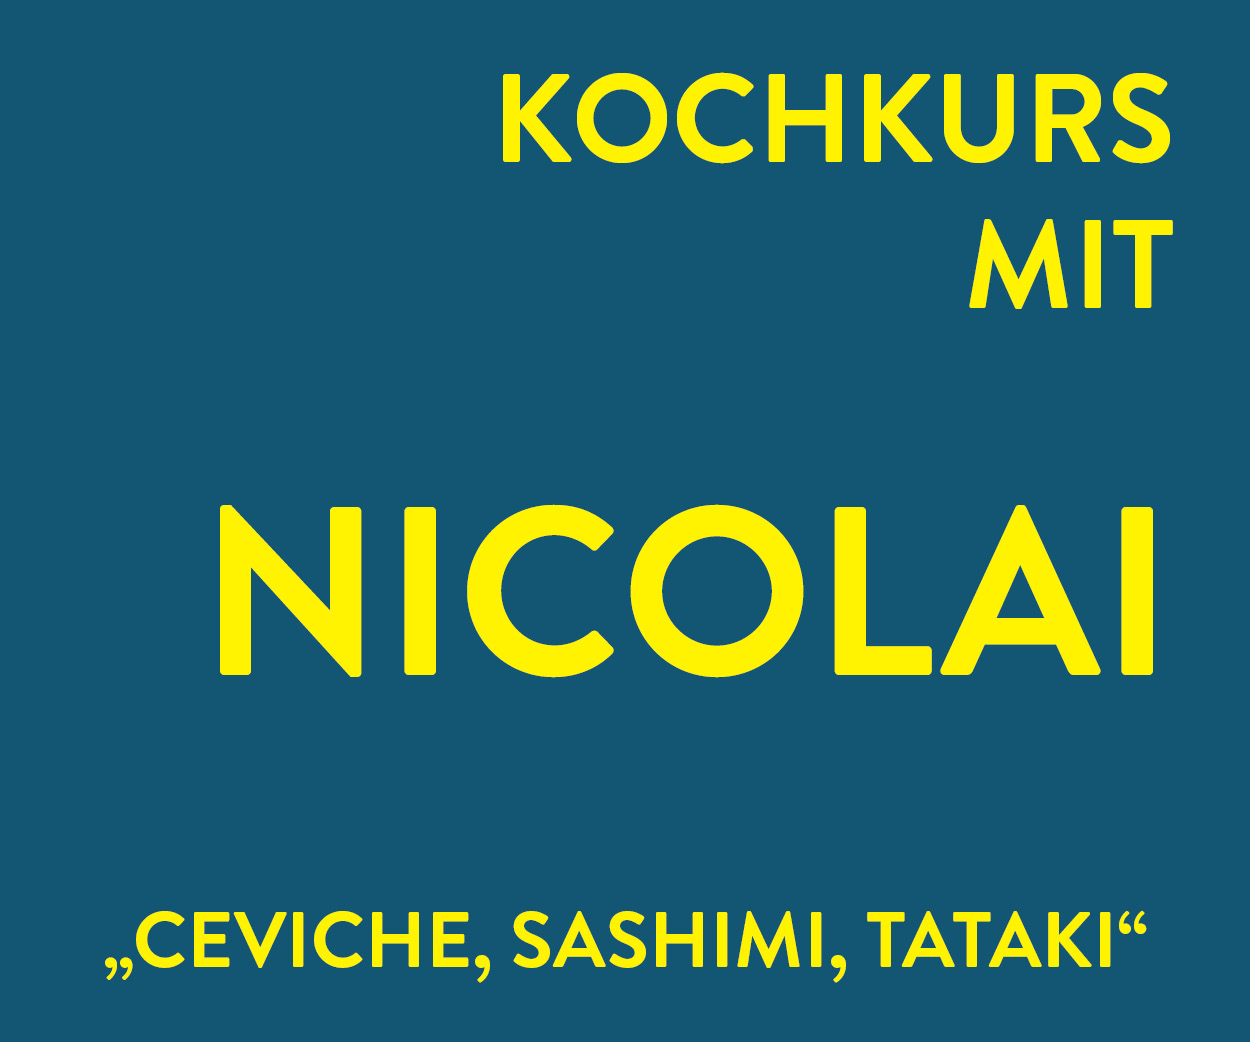 Ceviche, Sashimi, Tataki - Kochkurs mit Nicolai 